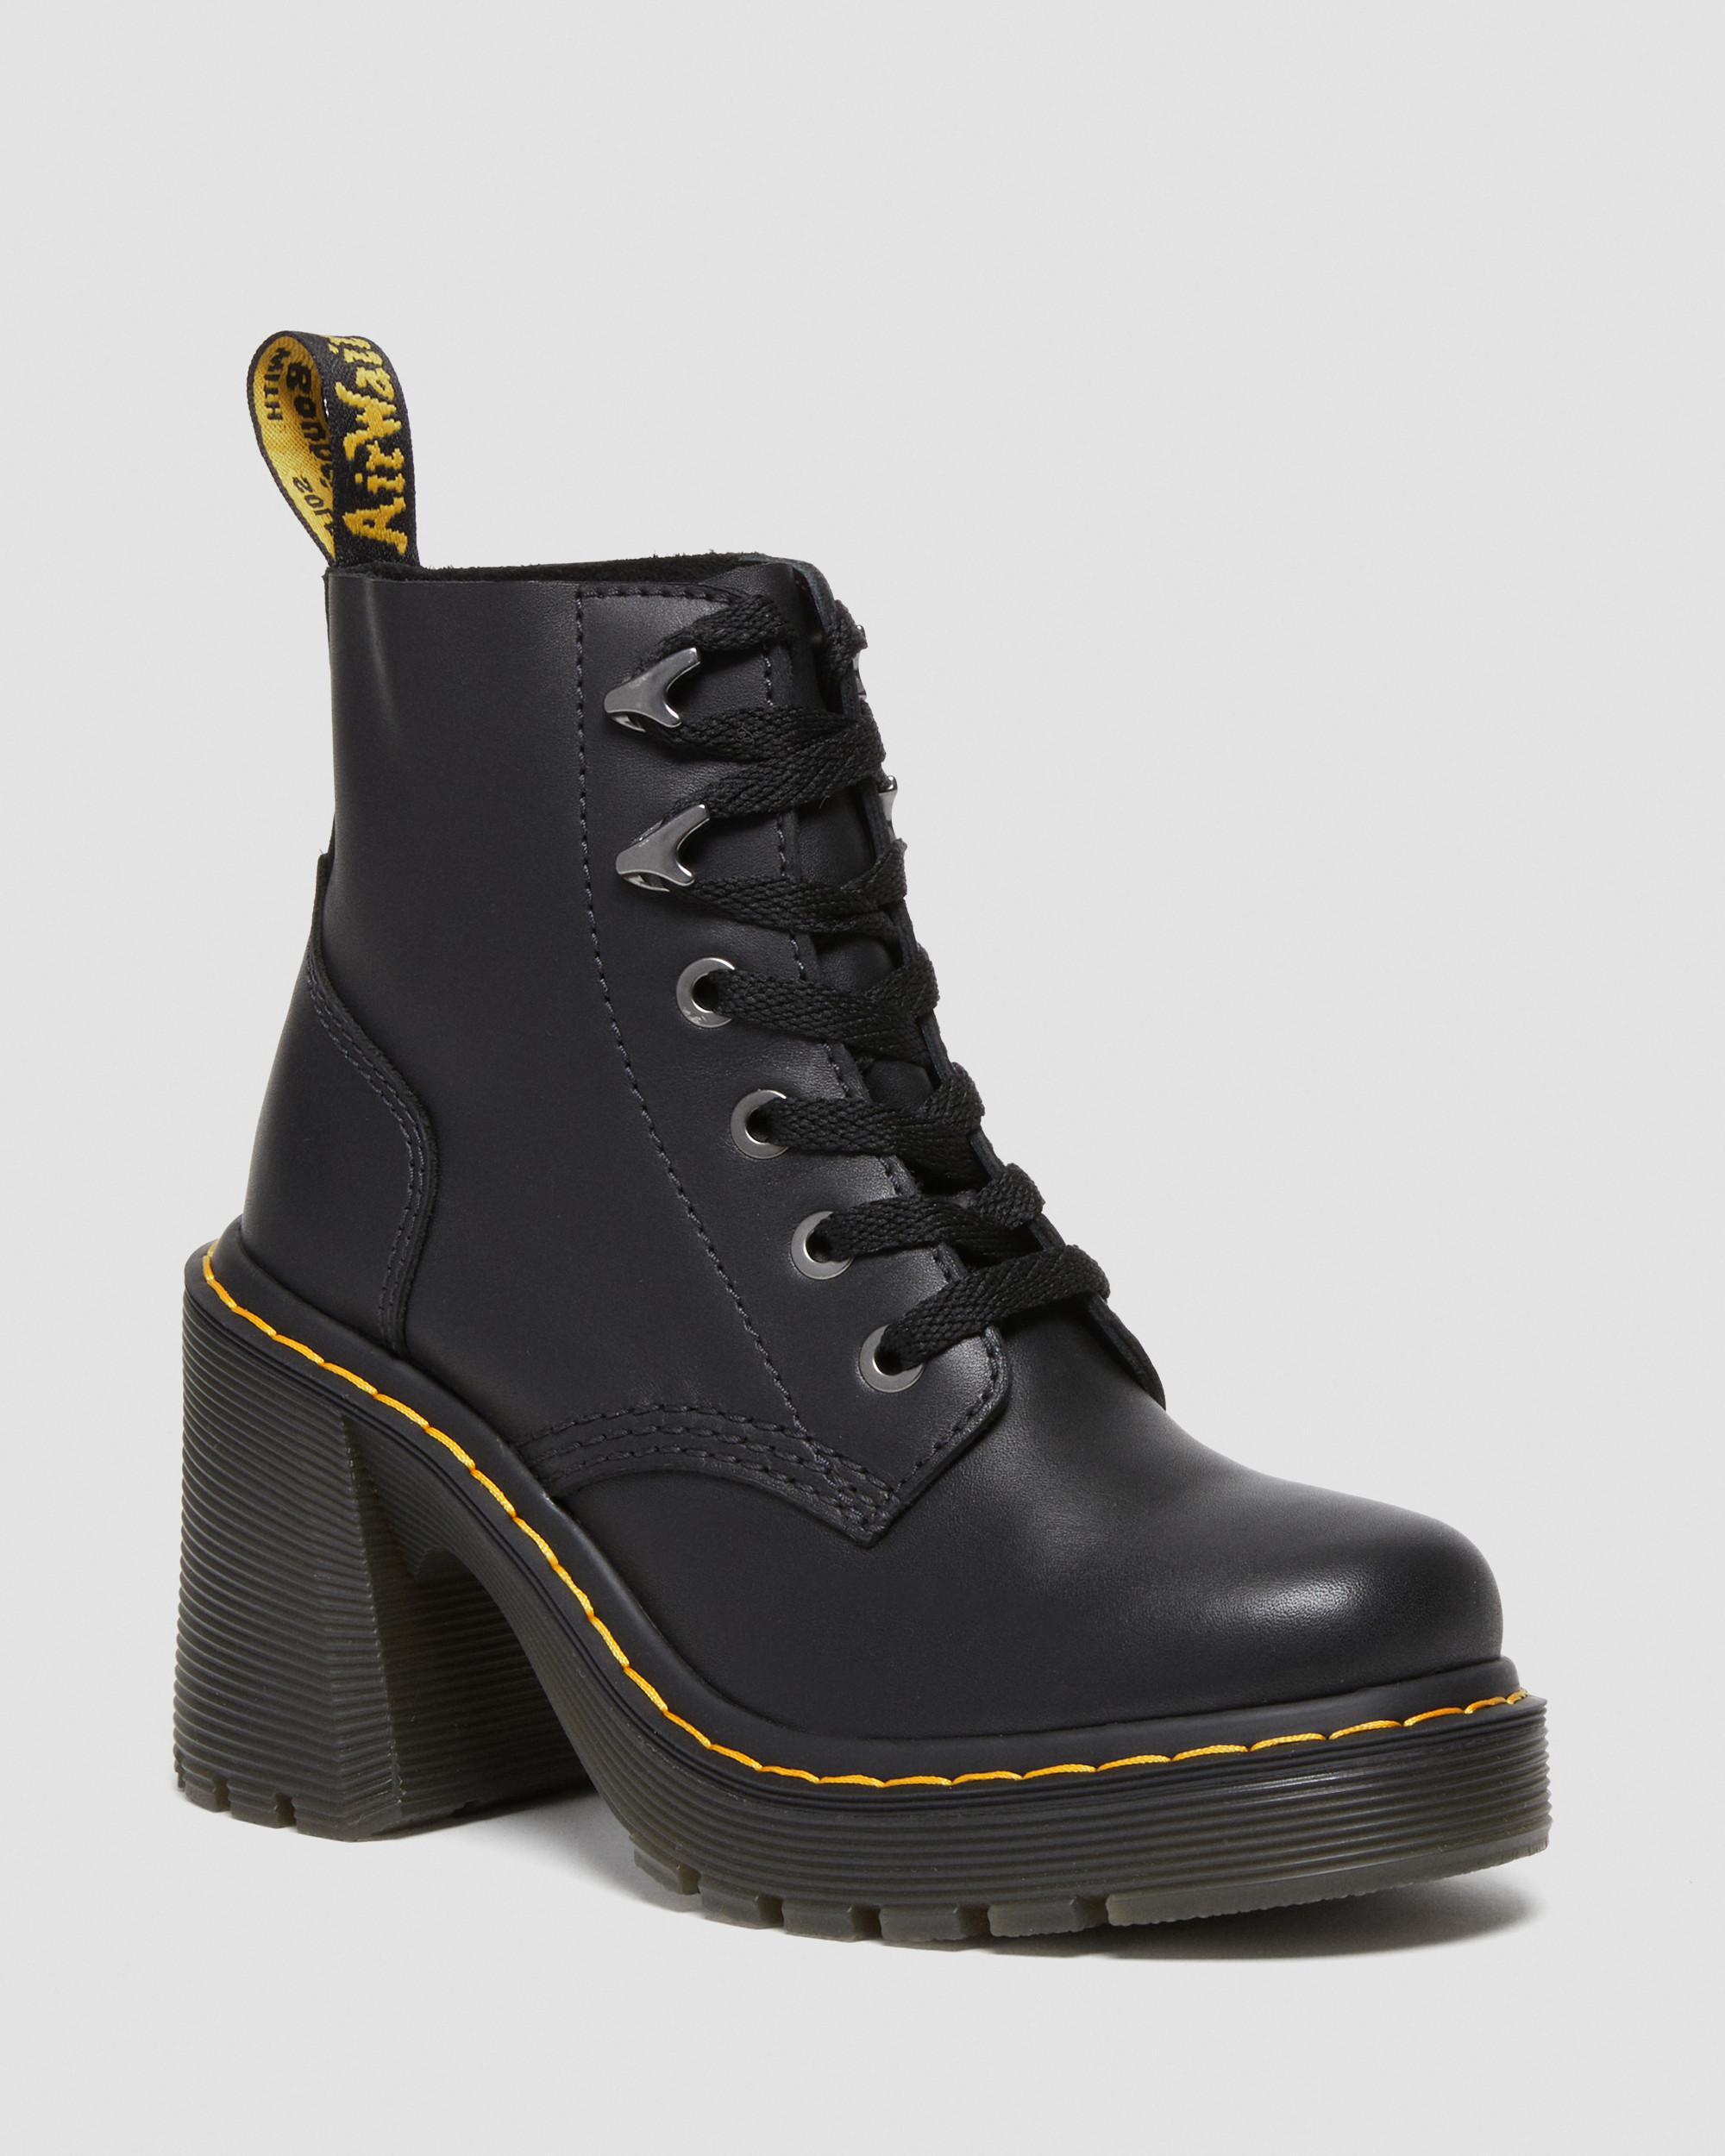 Black Oxford lace-up boots for women Beatnik Barbara Black